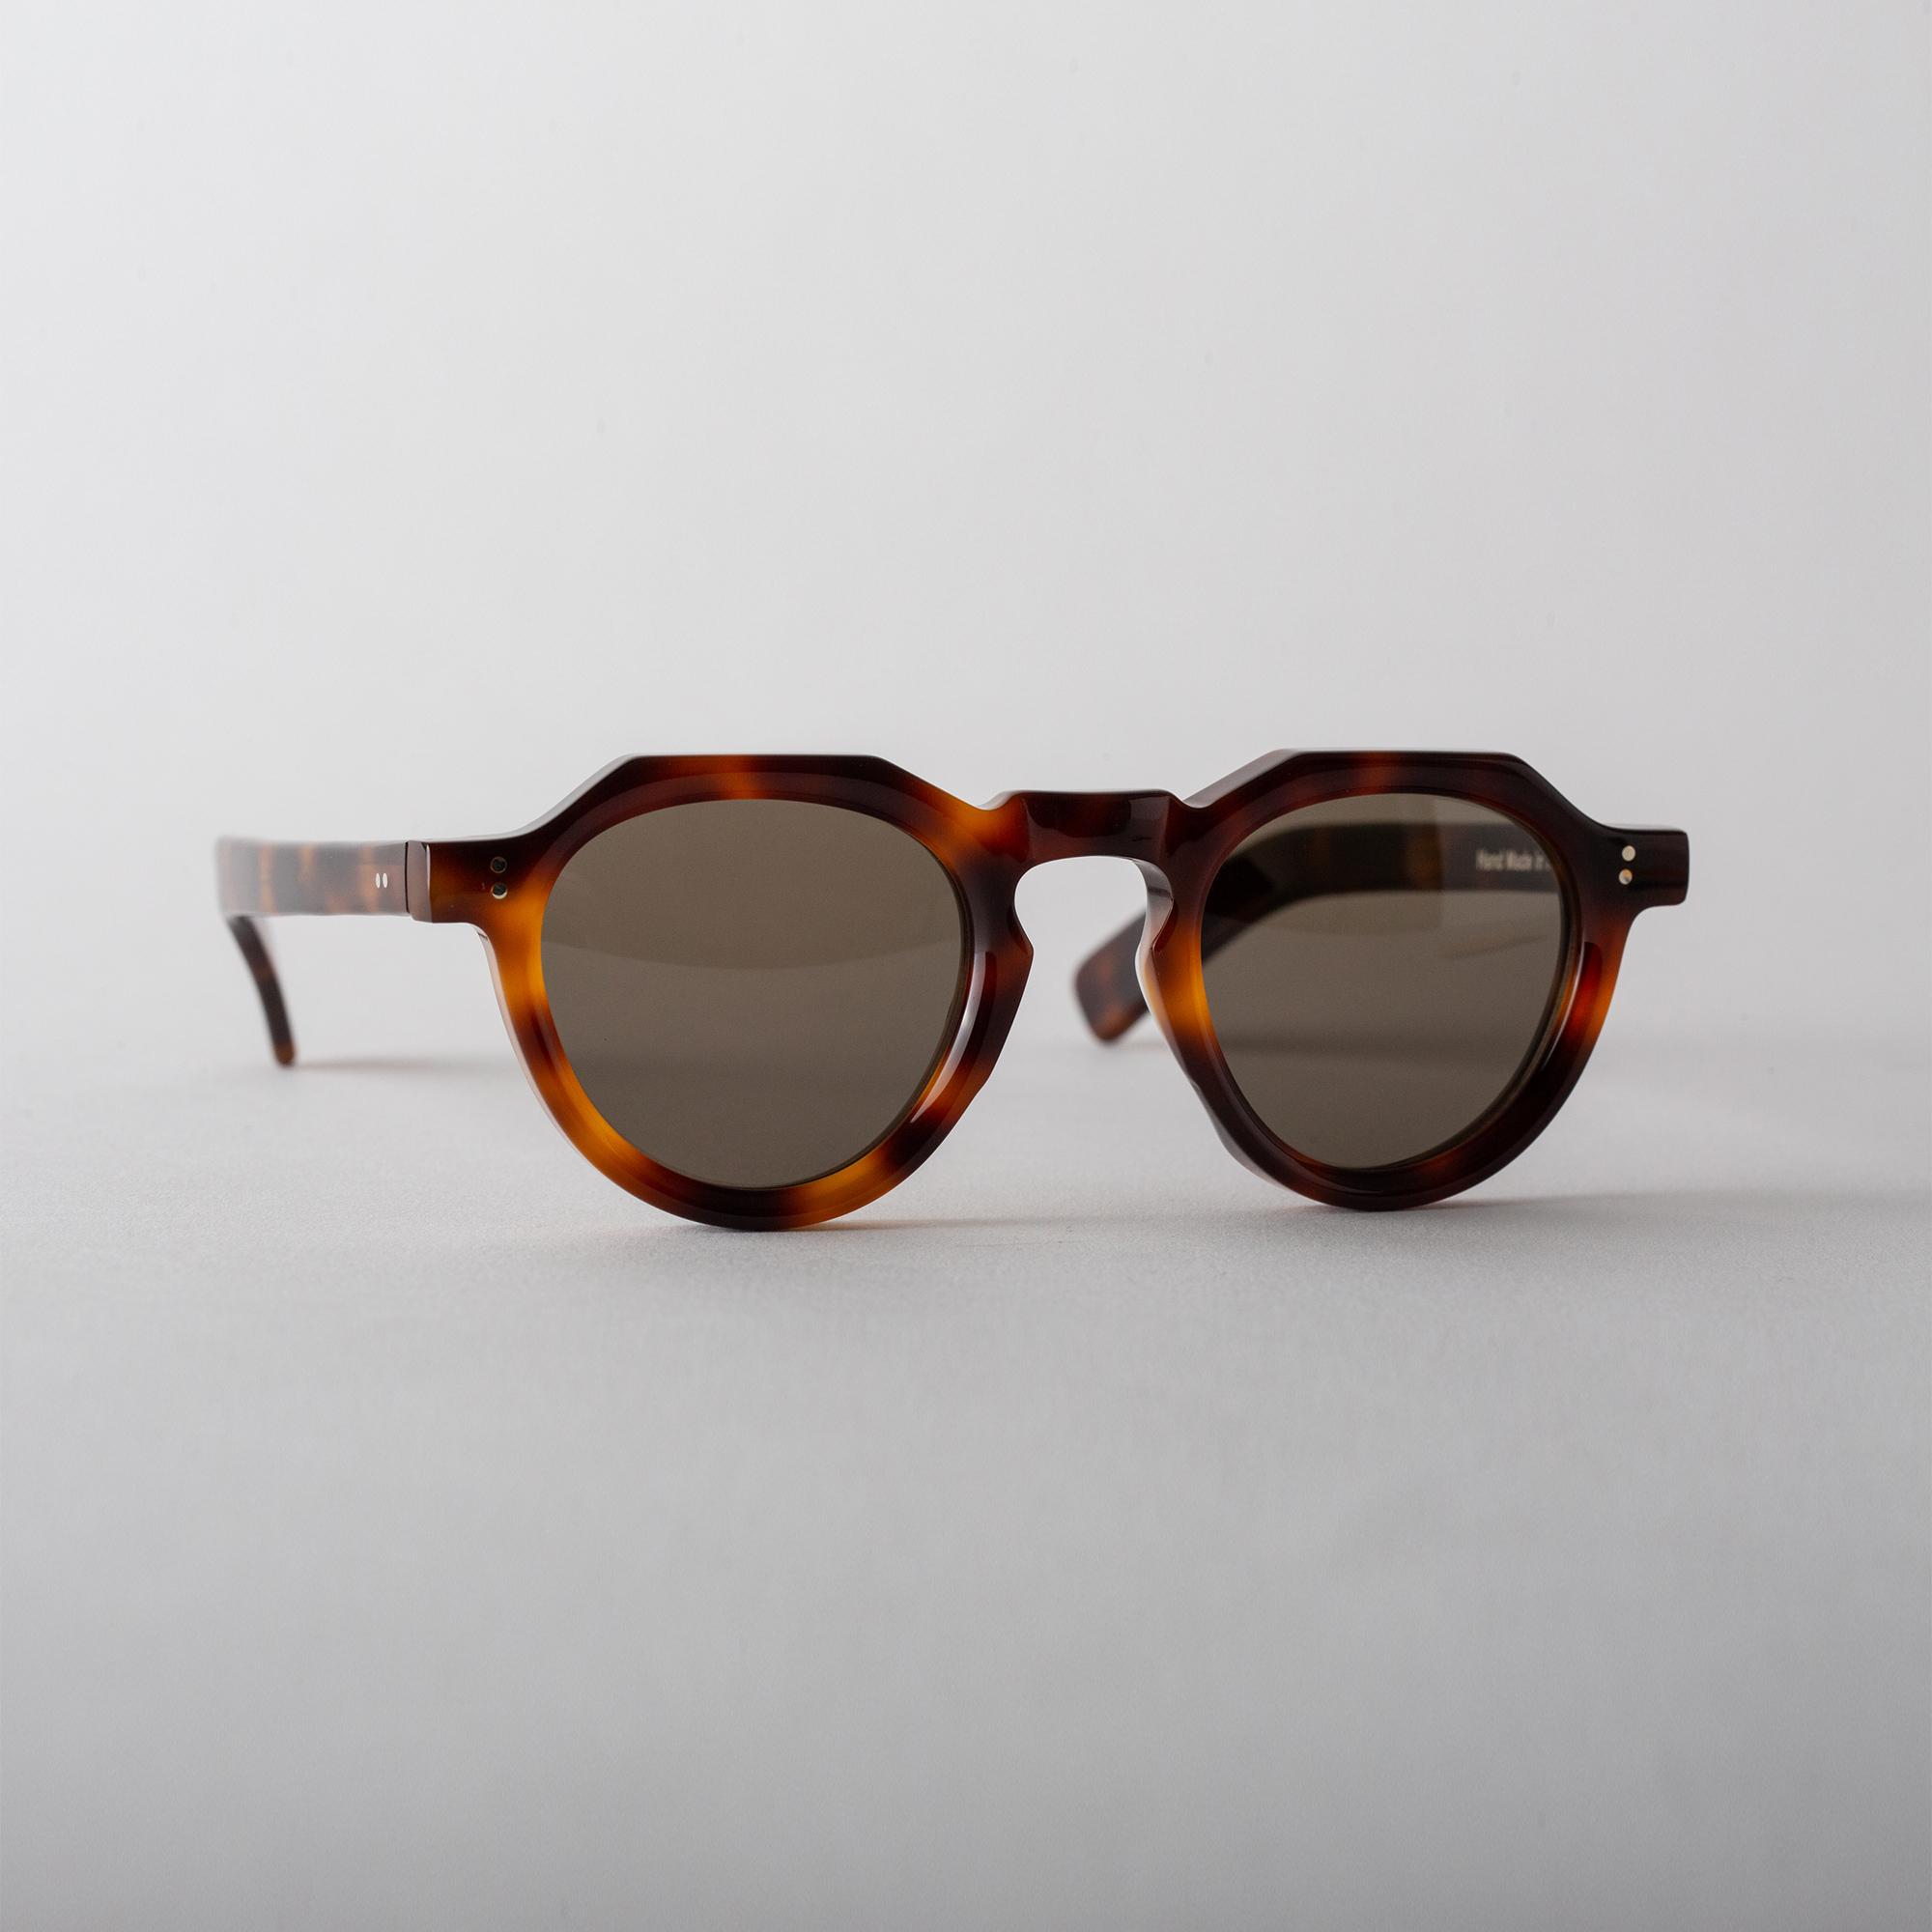 Sunglasses MOD 01 in Dark Tortoise color by Arpenteur